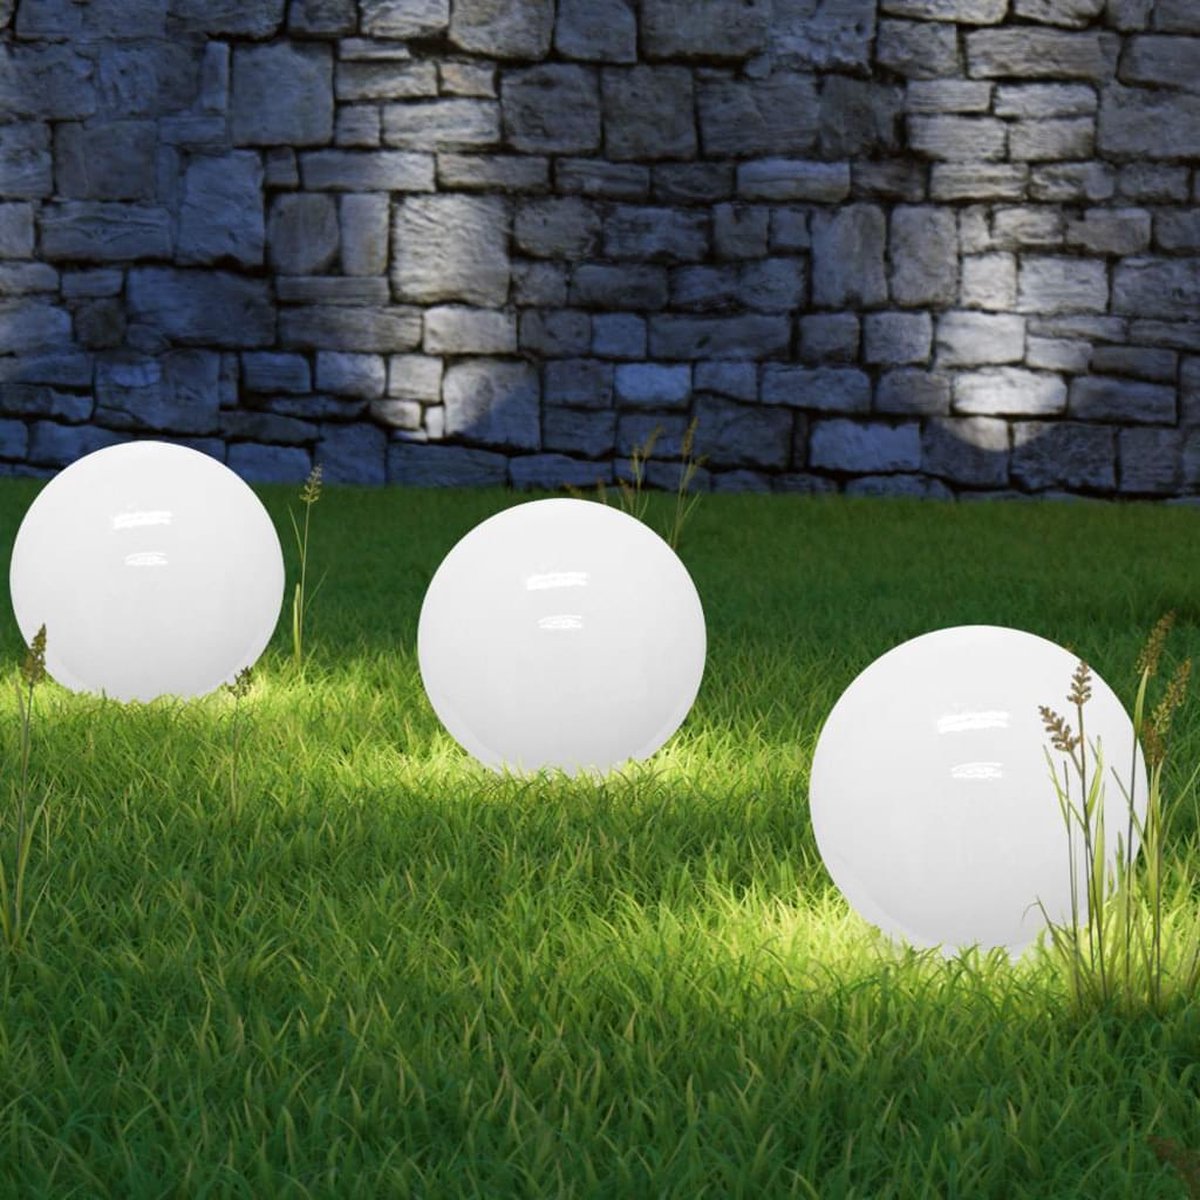 Solarbol, wit, lichtbol, 30cm, LED, bol verlichting, zonne energie,  energiezuinig | bol.com